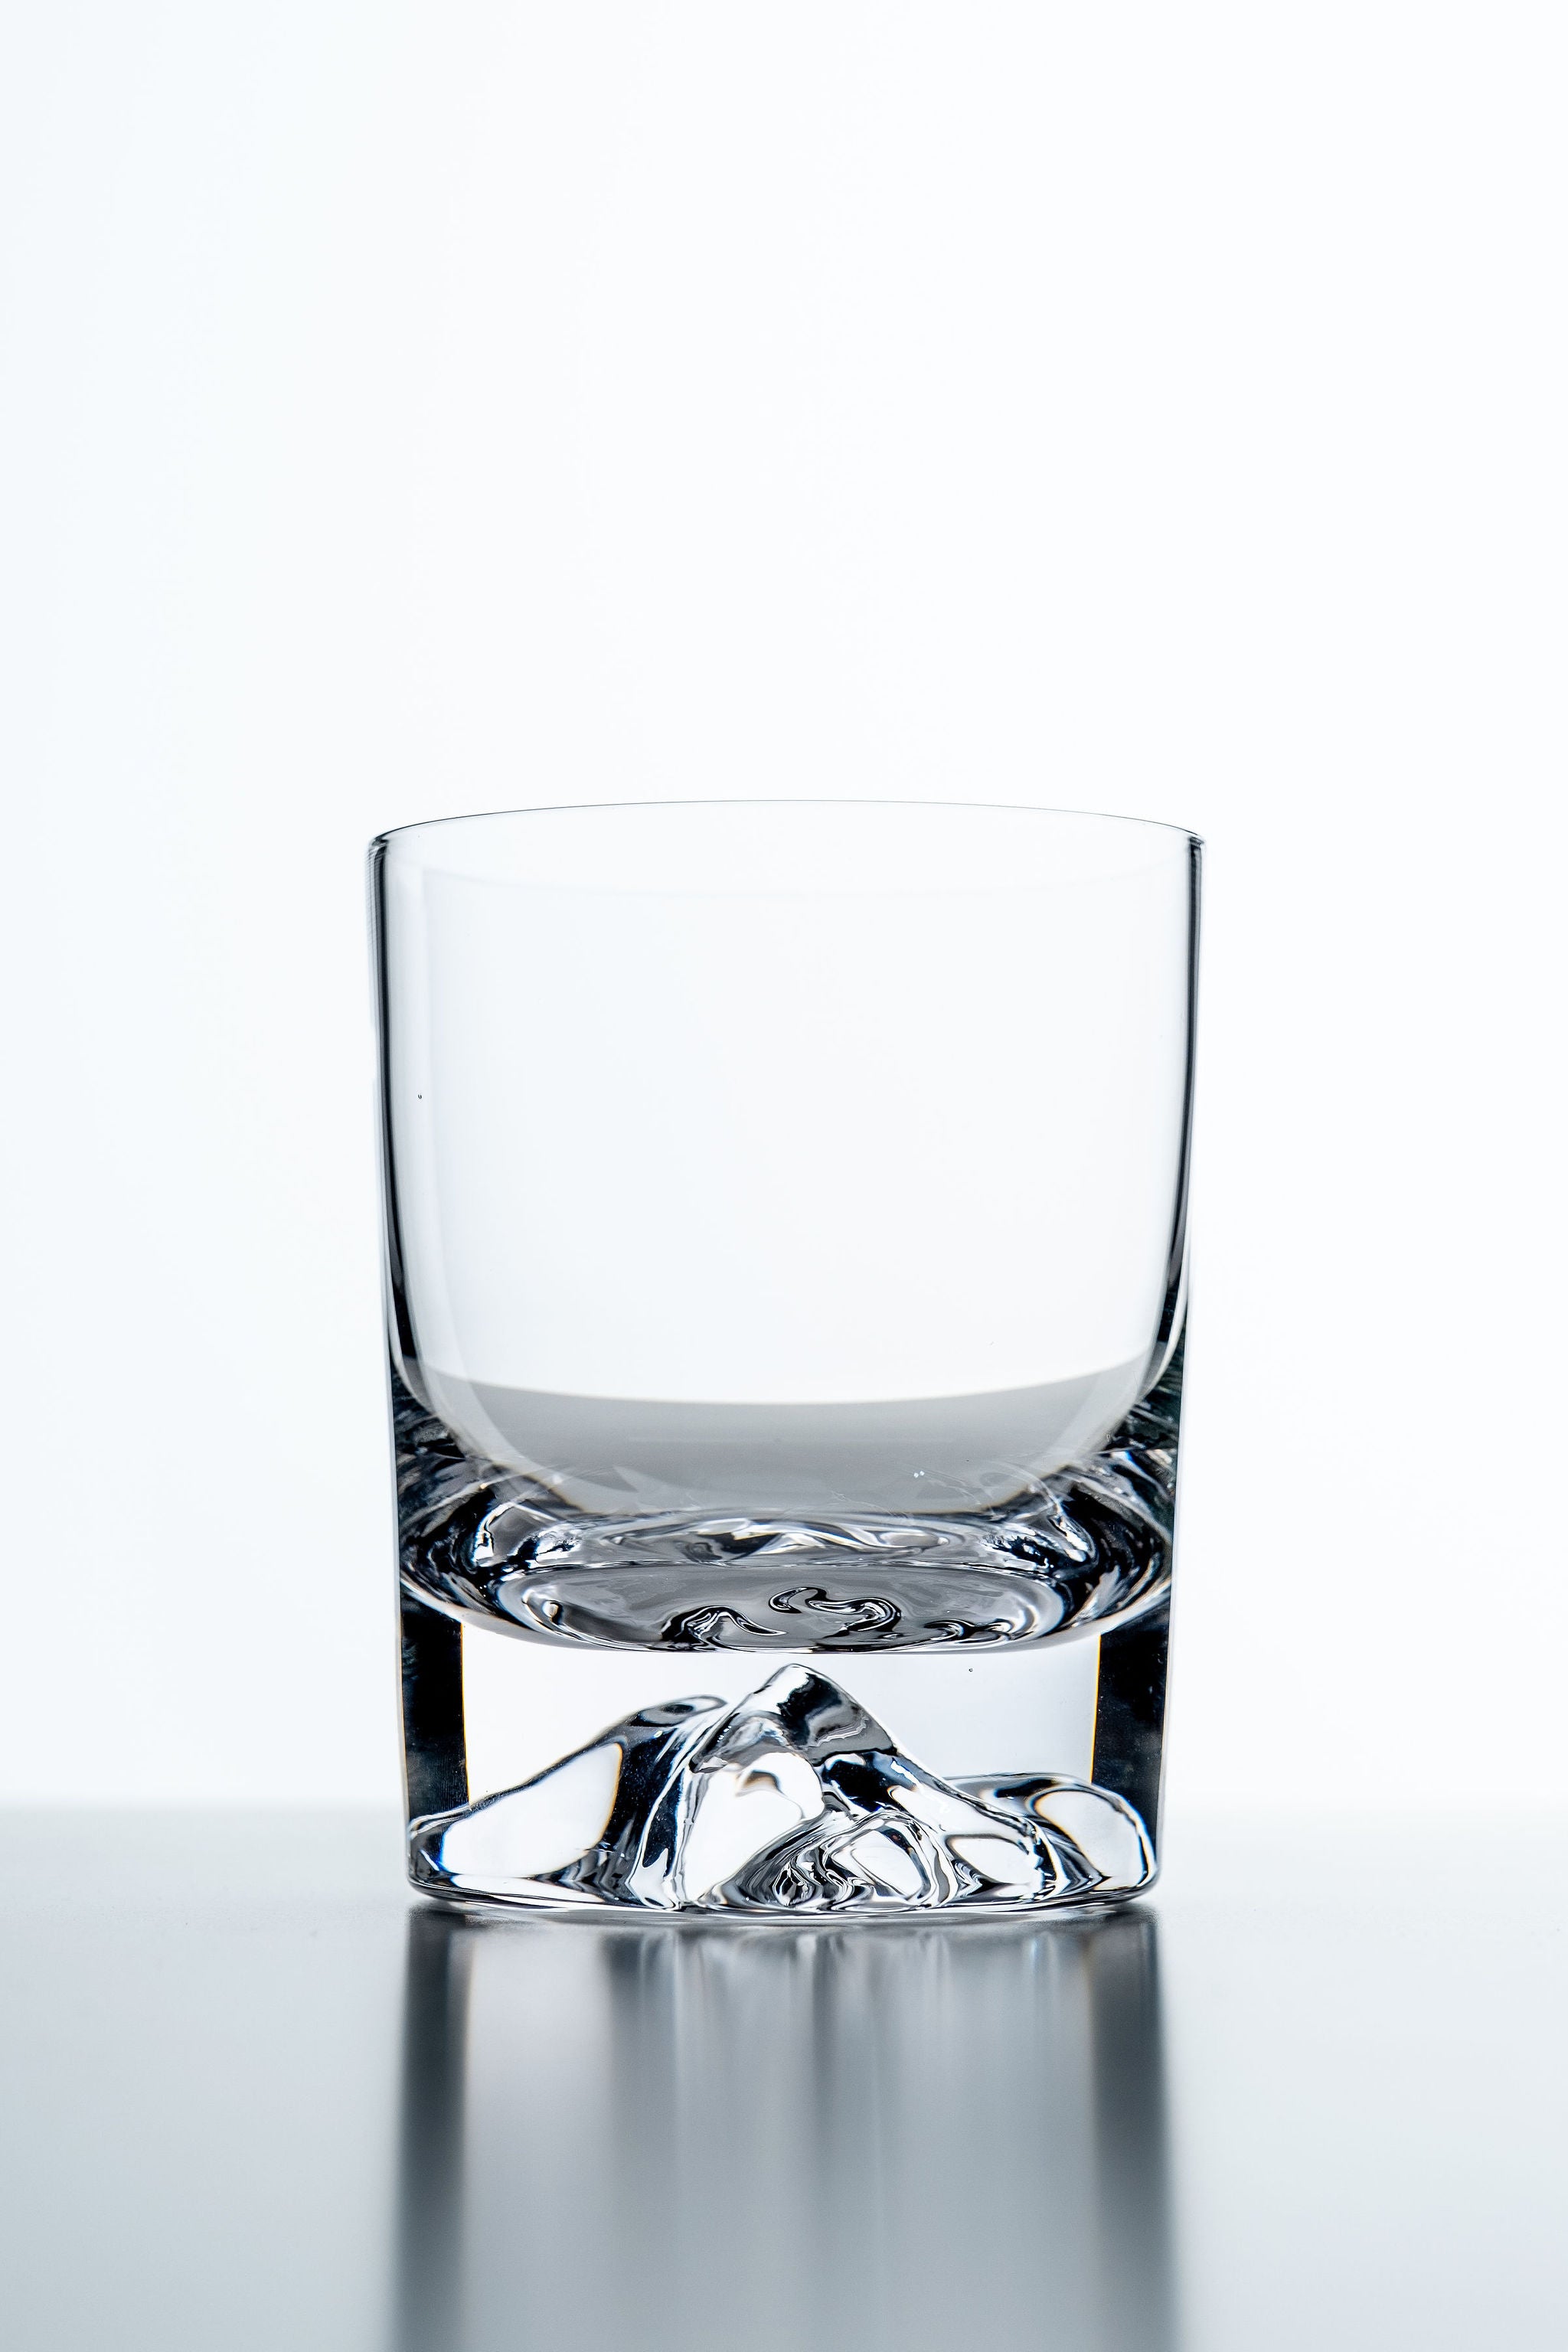 Amehla Co Smoked Whiskey Glasses – Set of 2